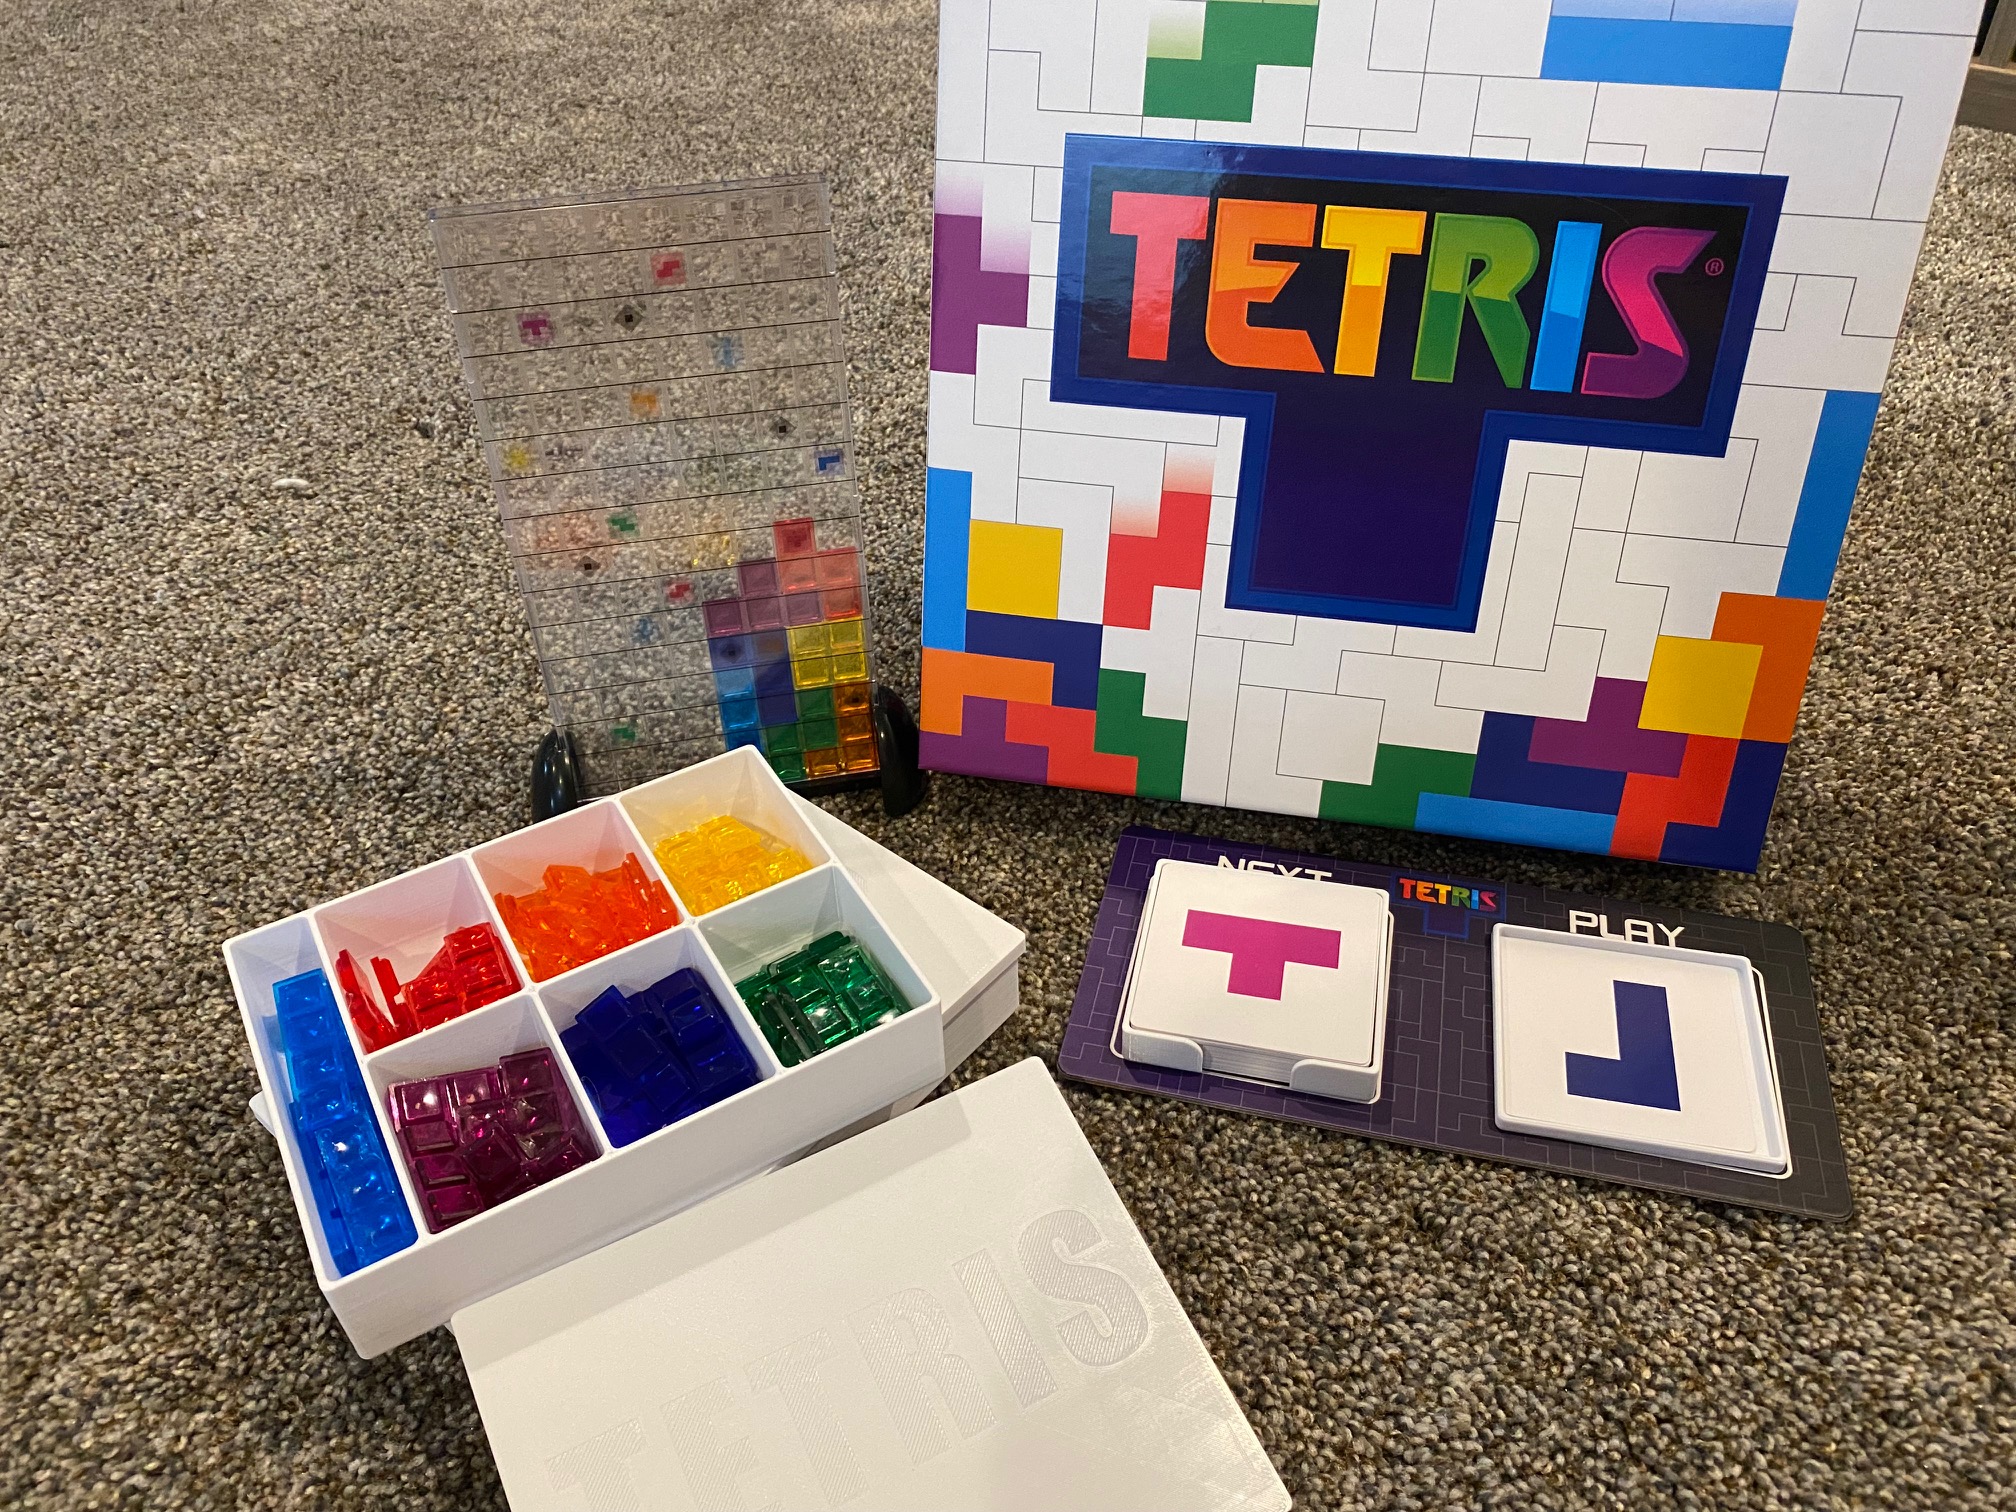 Tetris Game Organizer and Card Tray